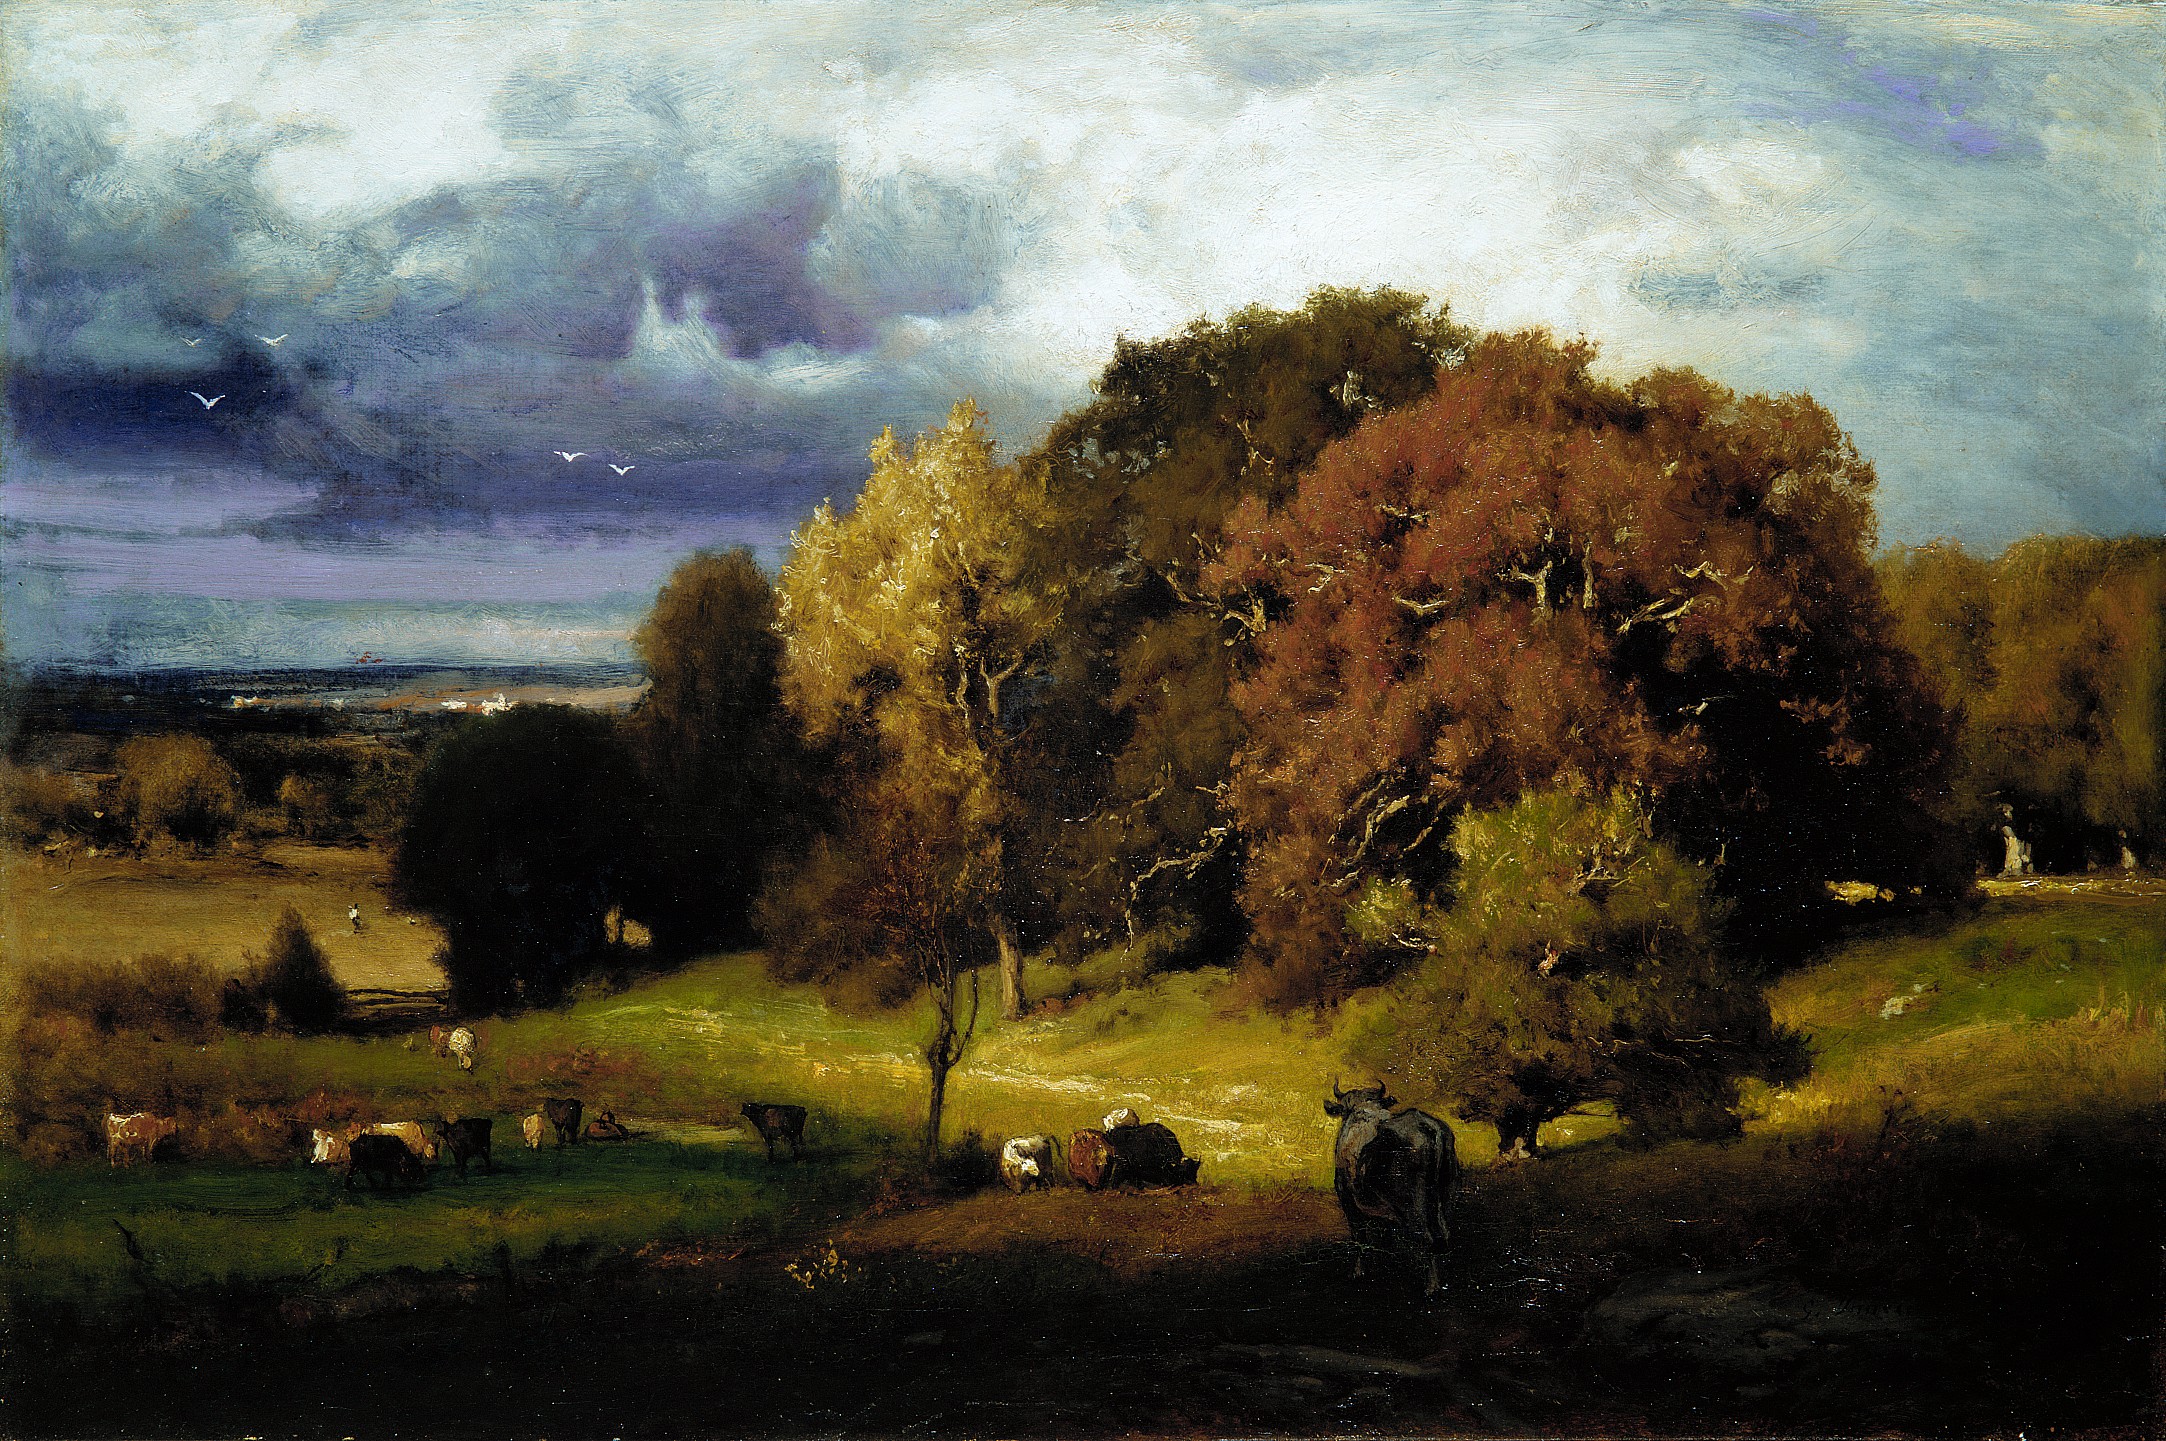 Autumn Oaks by George Inness - 1878 - 54.3 x 76.5 cm Metropolitan Museum of Art